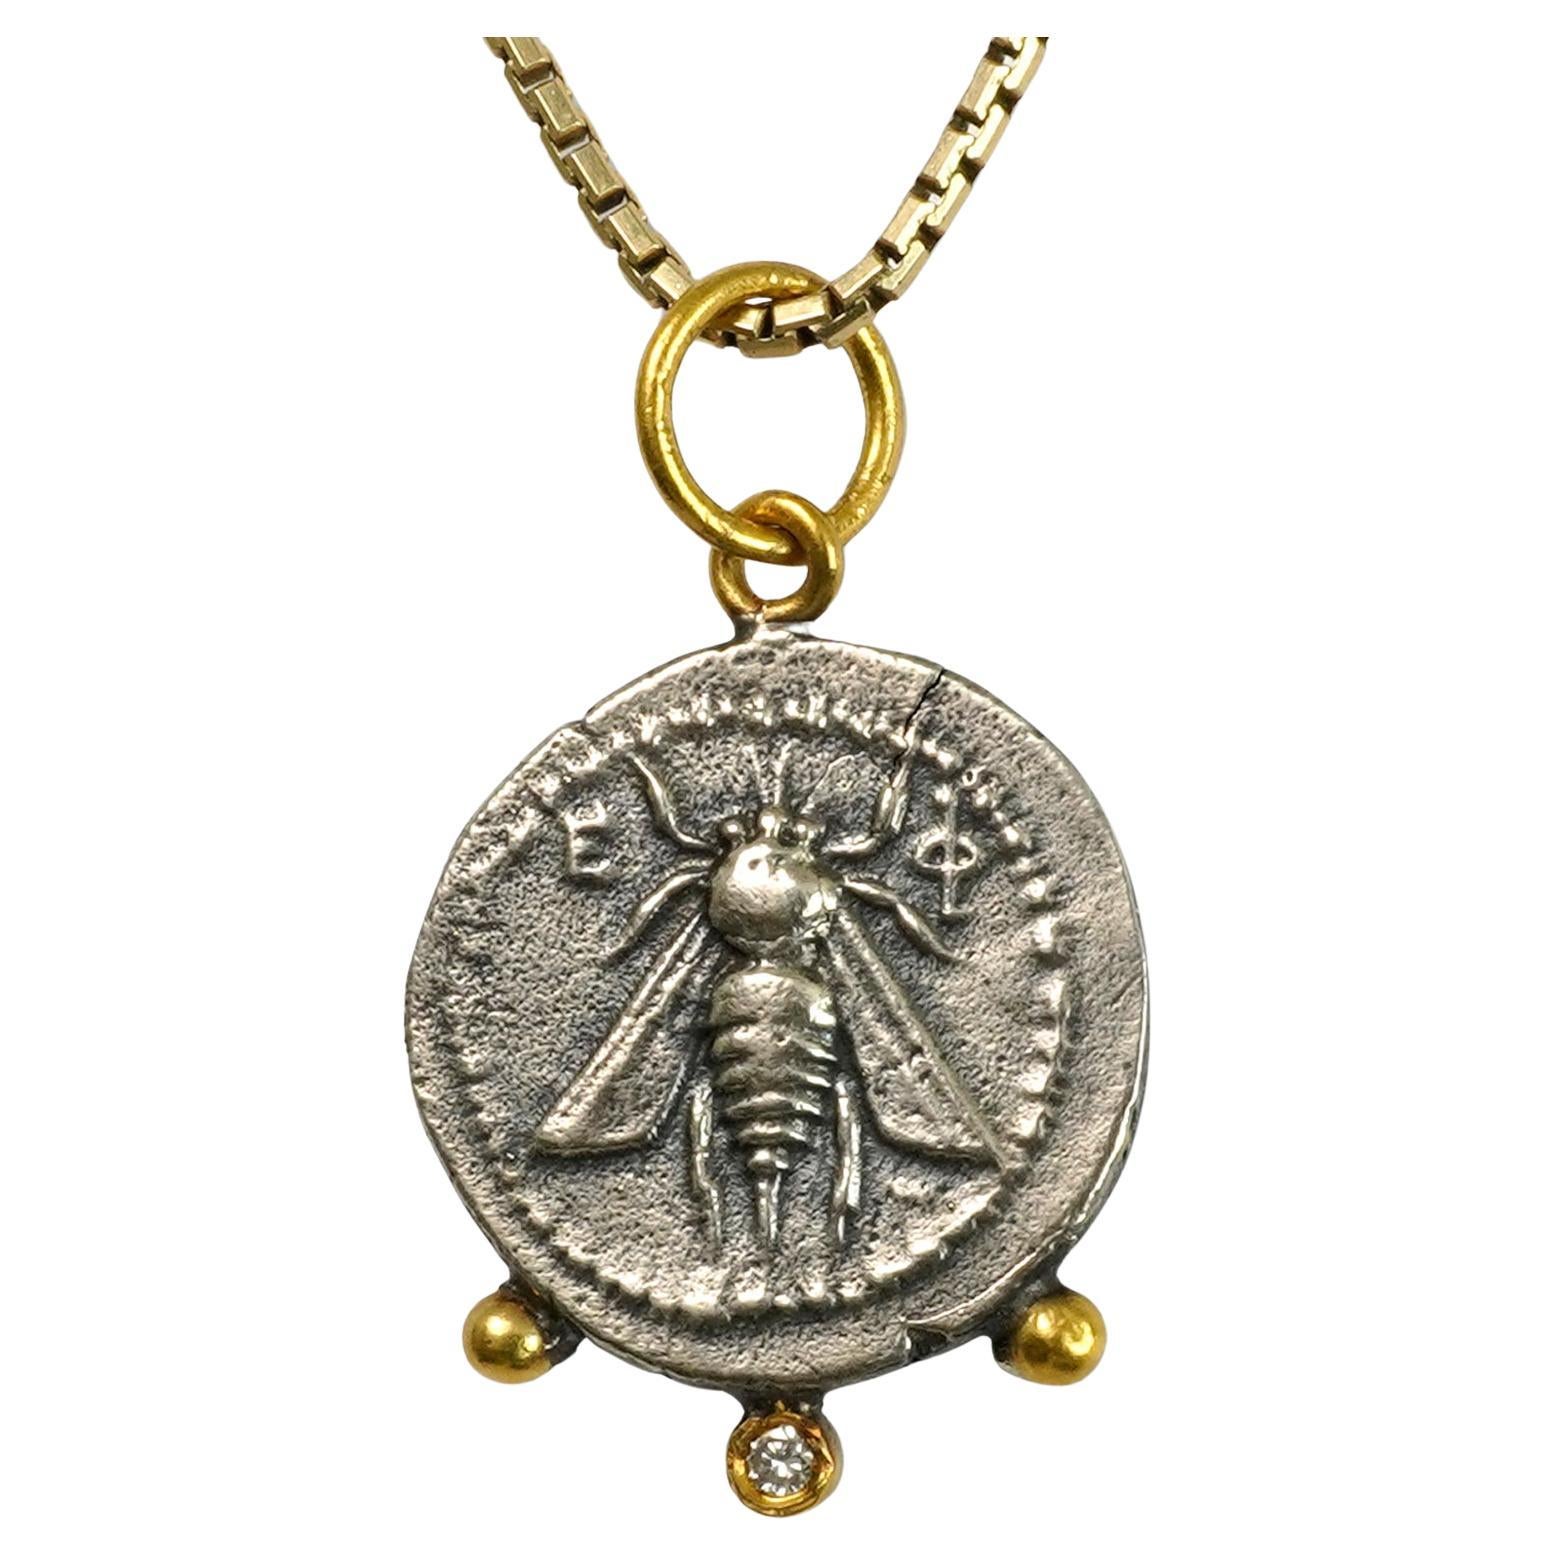 Ancient Ephesus Queen Bee Coin Replica Charm Pendant 24K Gold 925 0.02ct Diamond